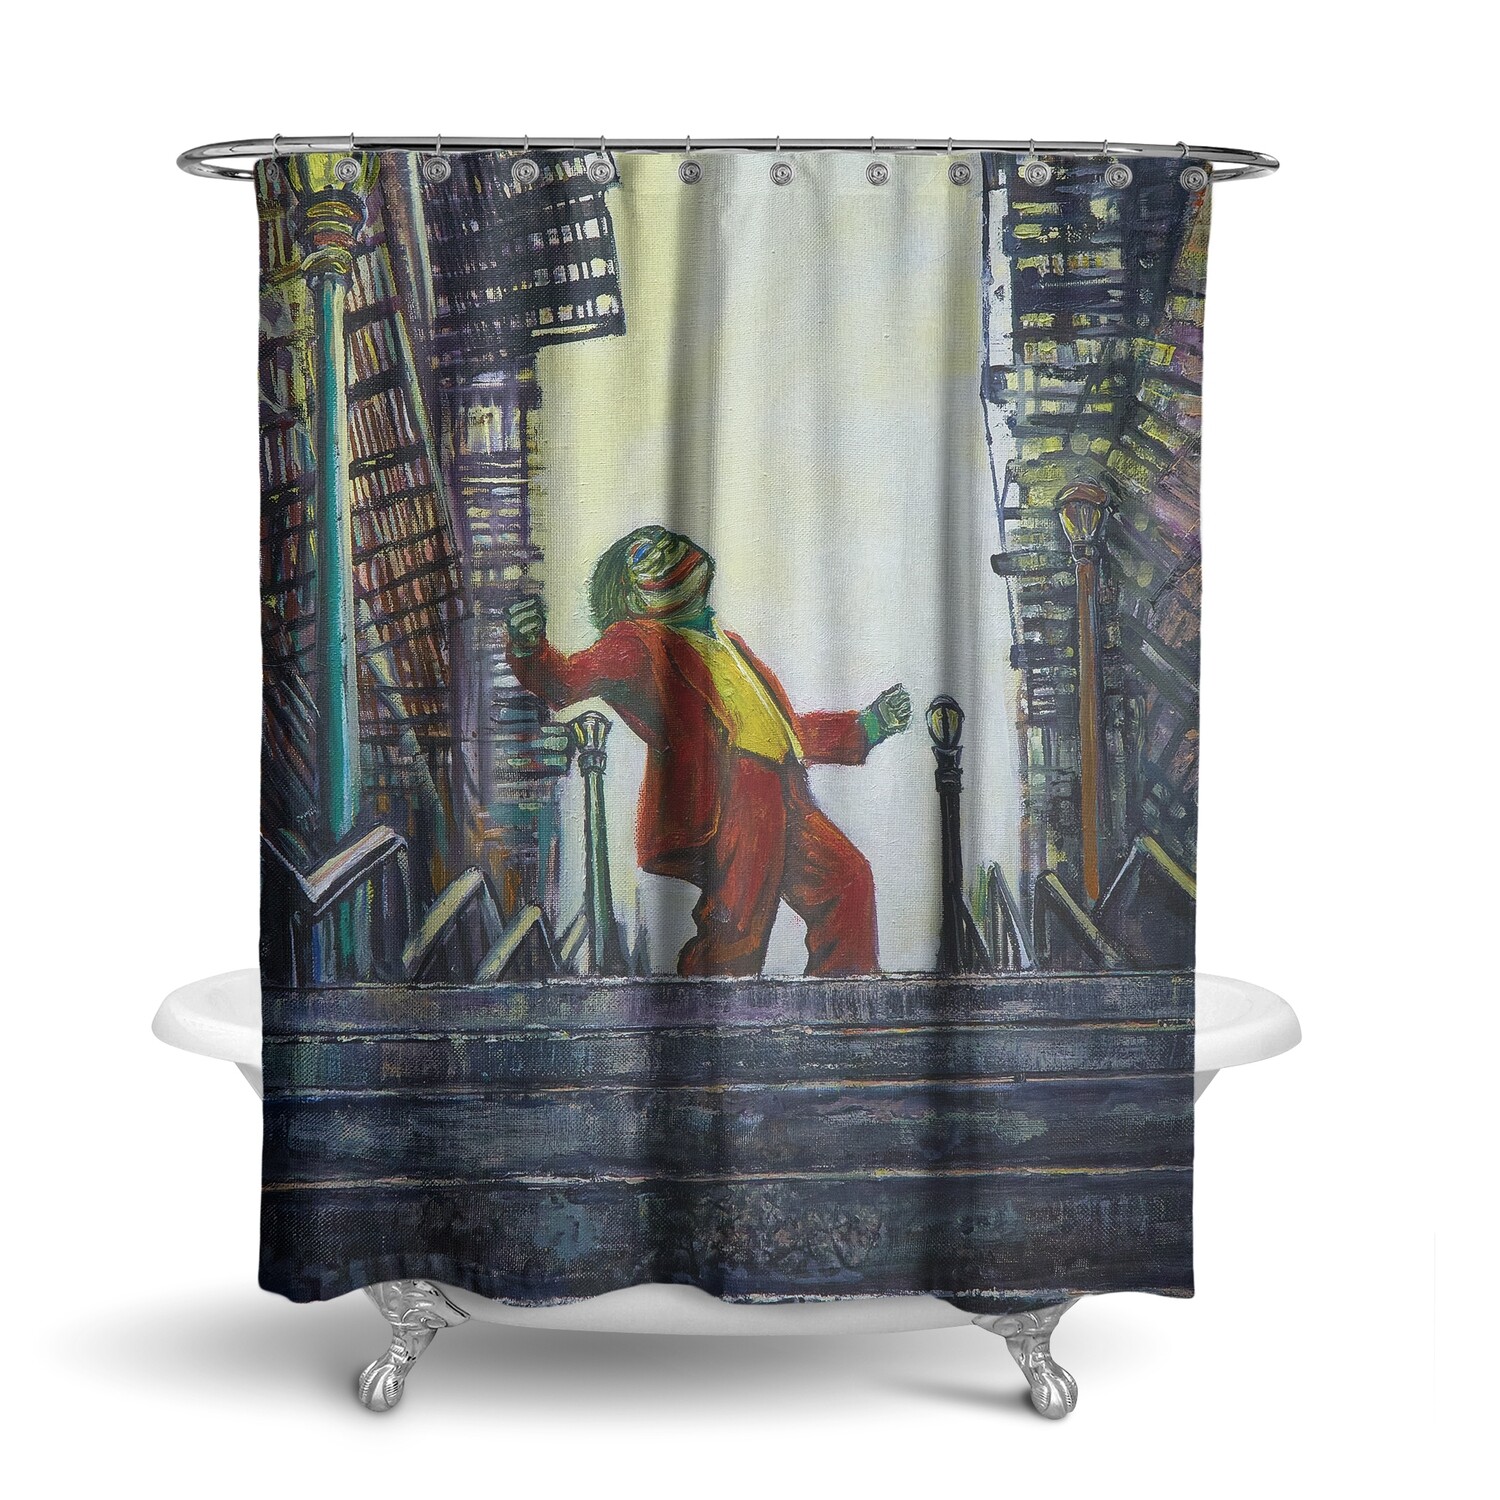 Joker Pepe Dancing on Stairs (shower curtain)